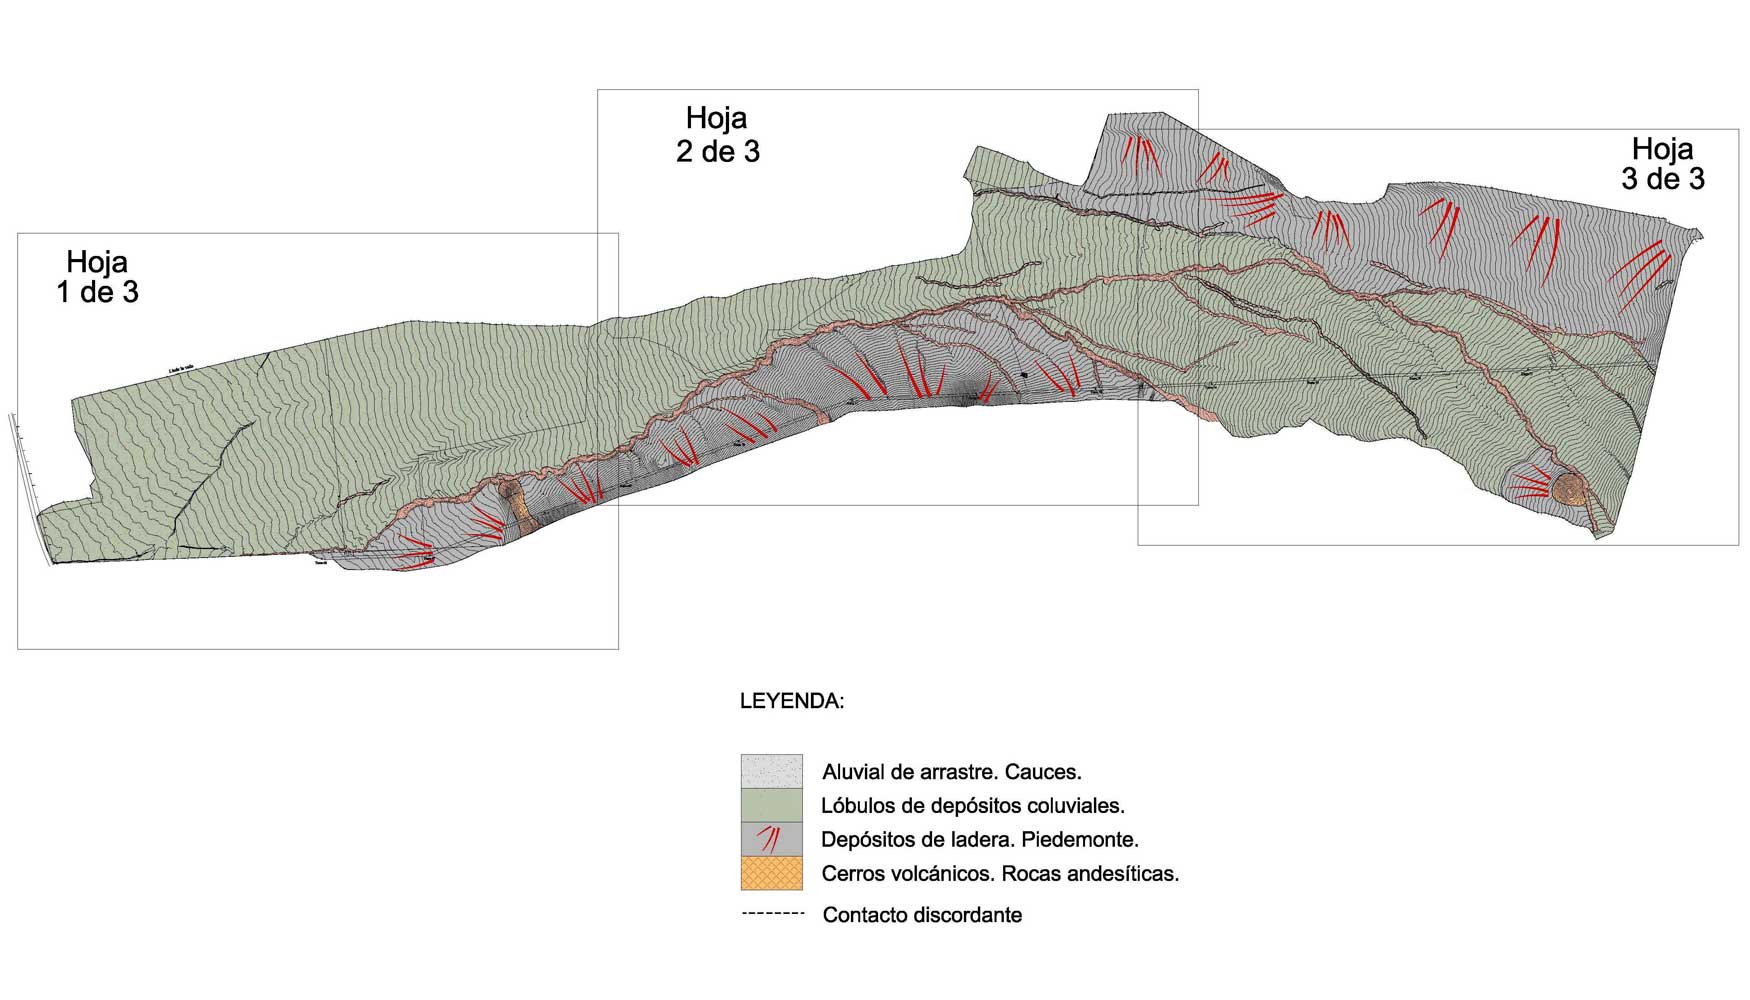 Fig. 1: Plano de zonificacin geolgica realizado por Orbis Terrarum